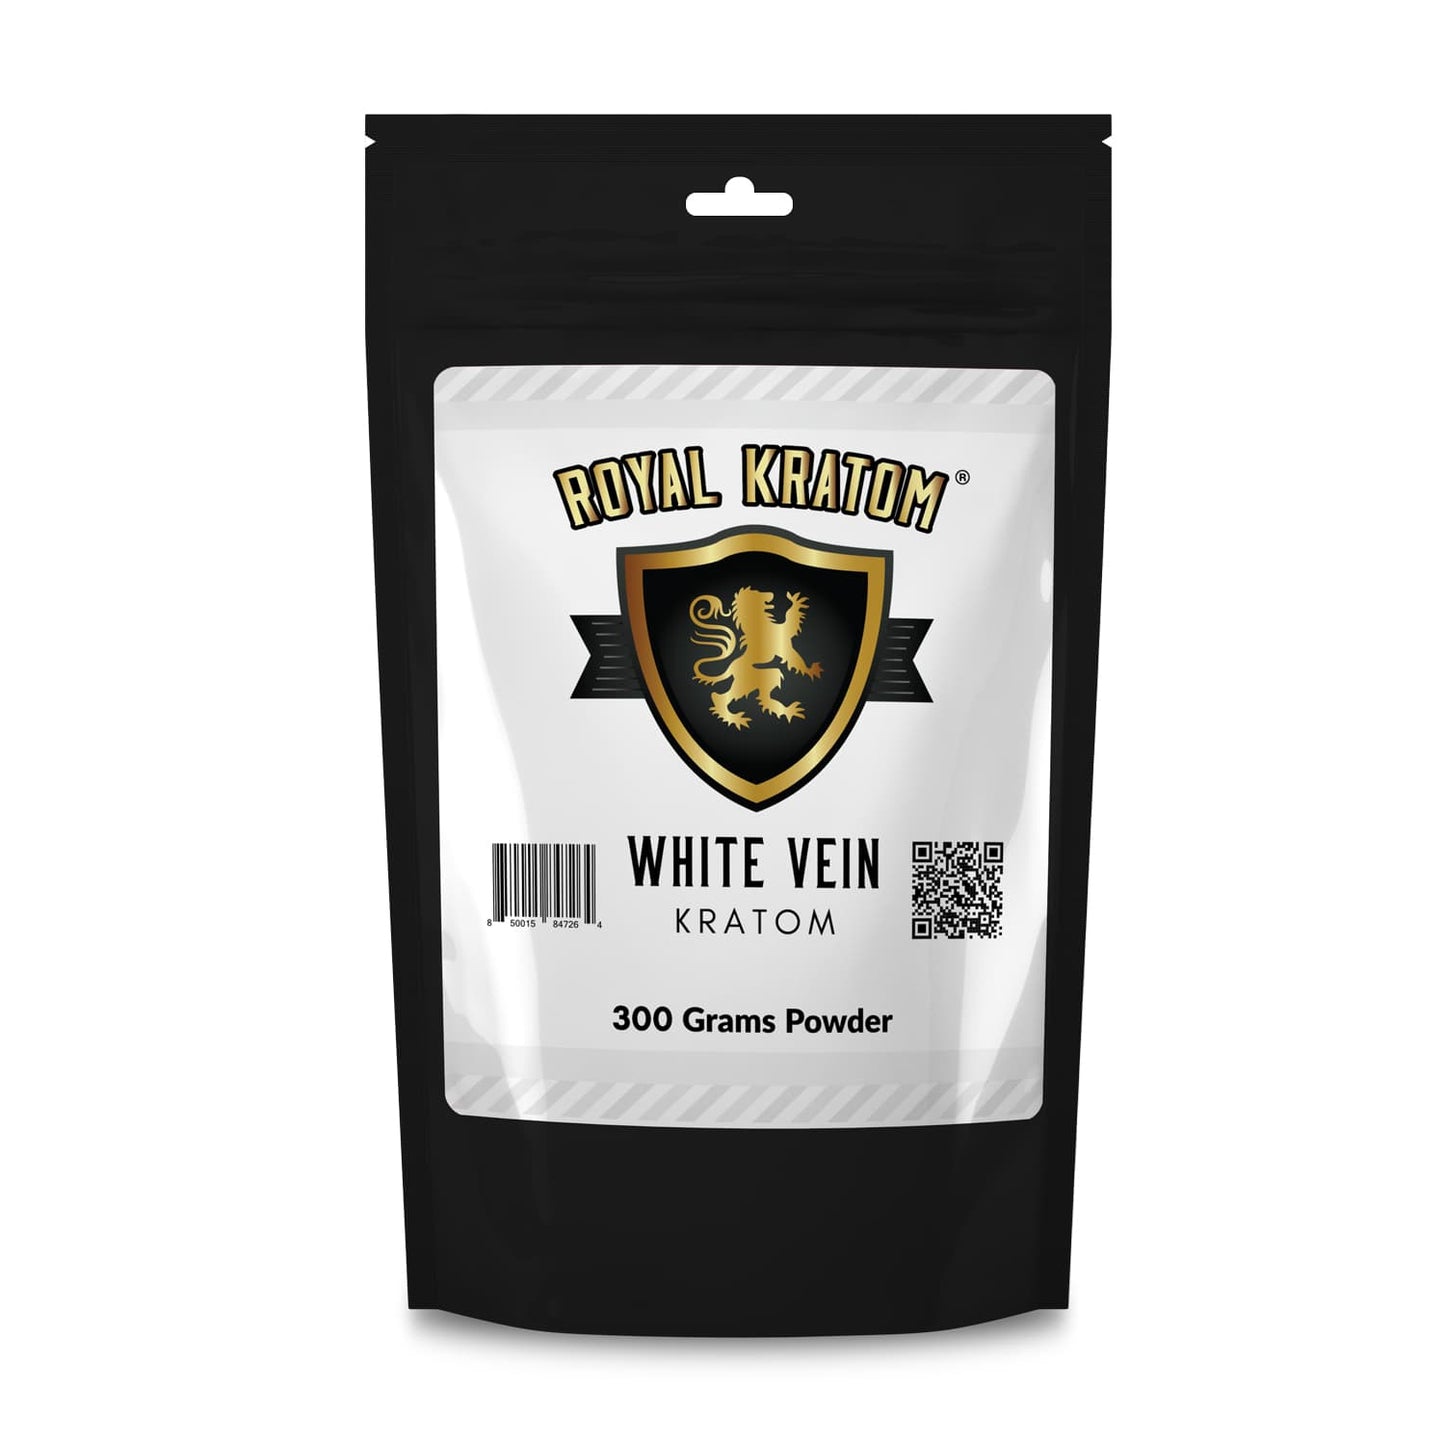 White Vein Kratom Powder 300 Grams front of package